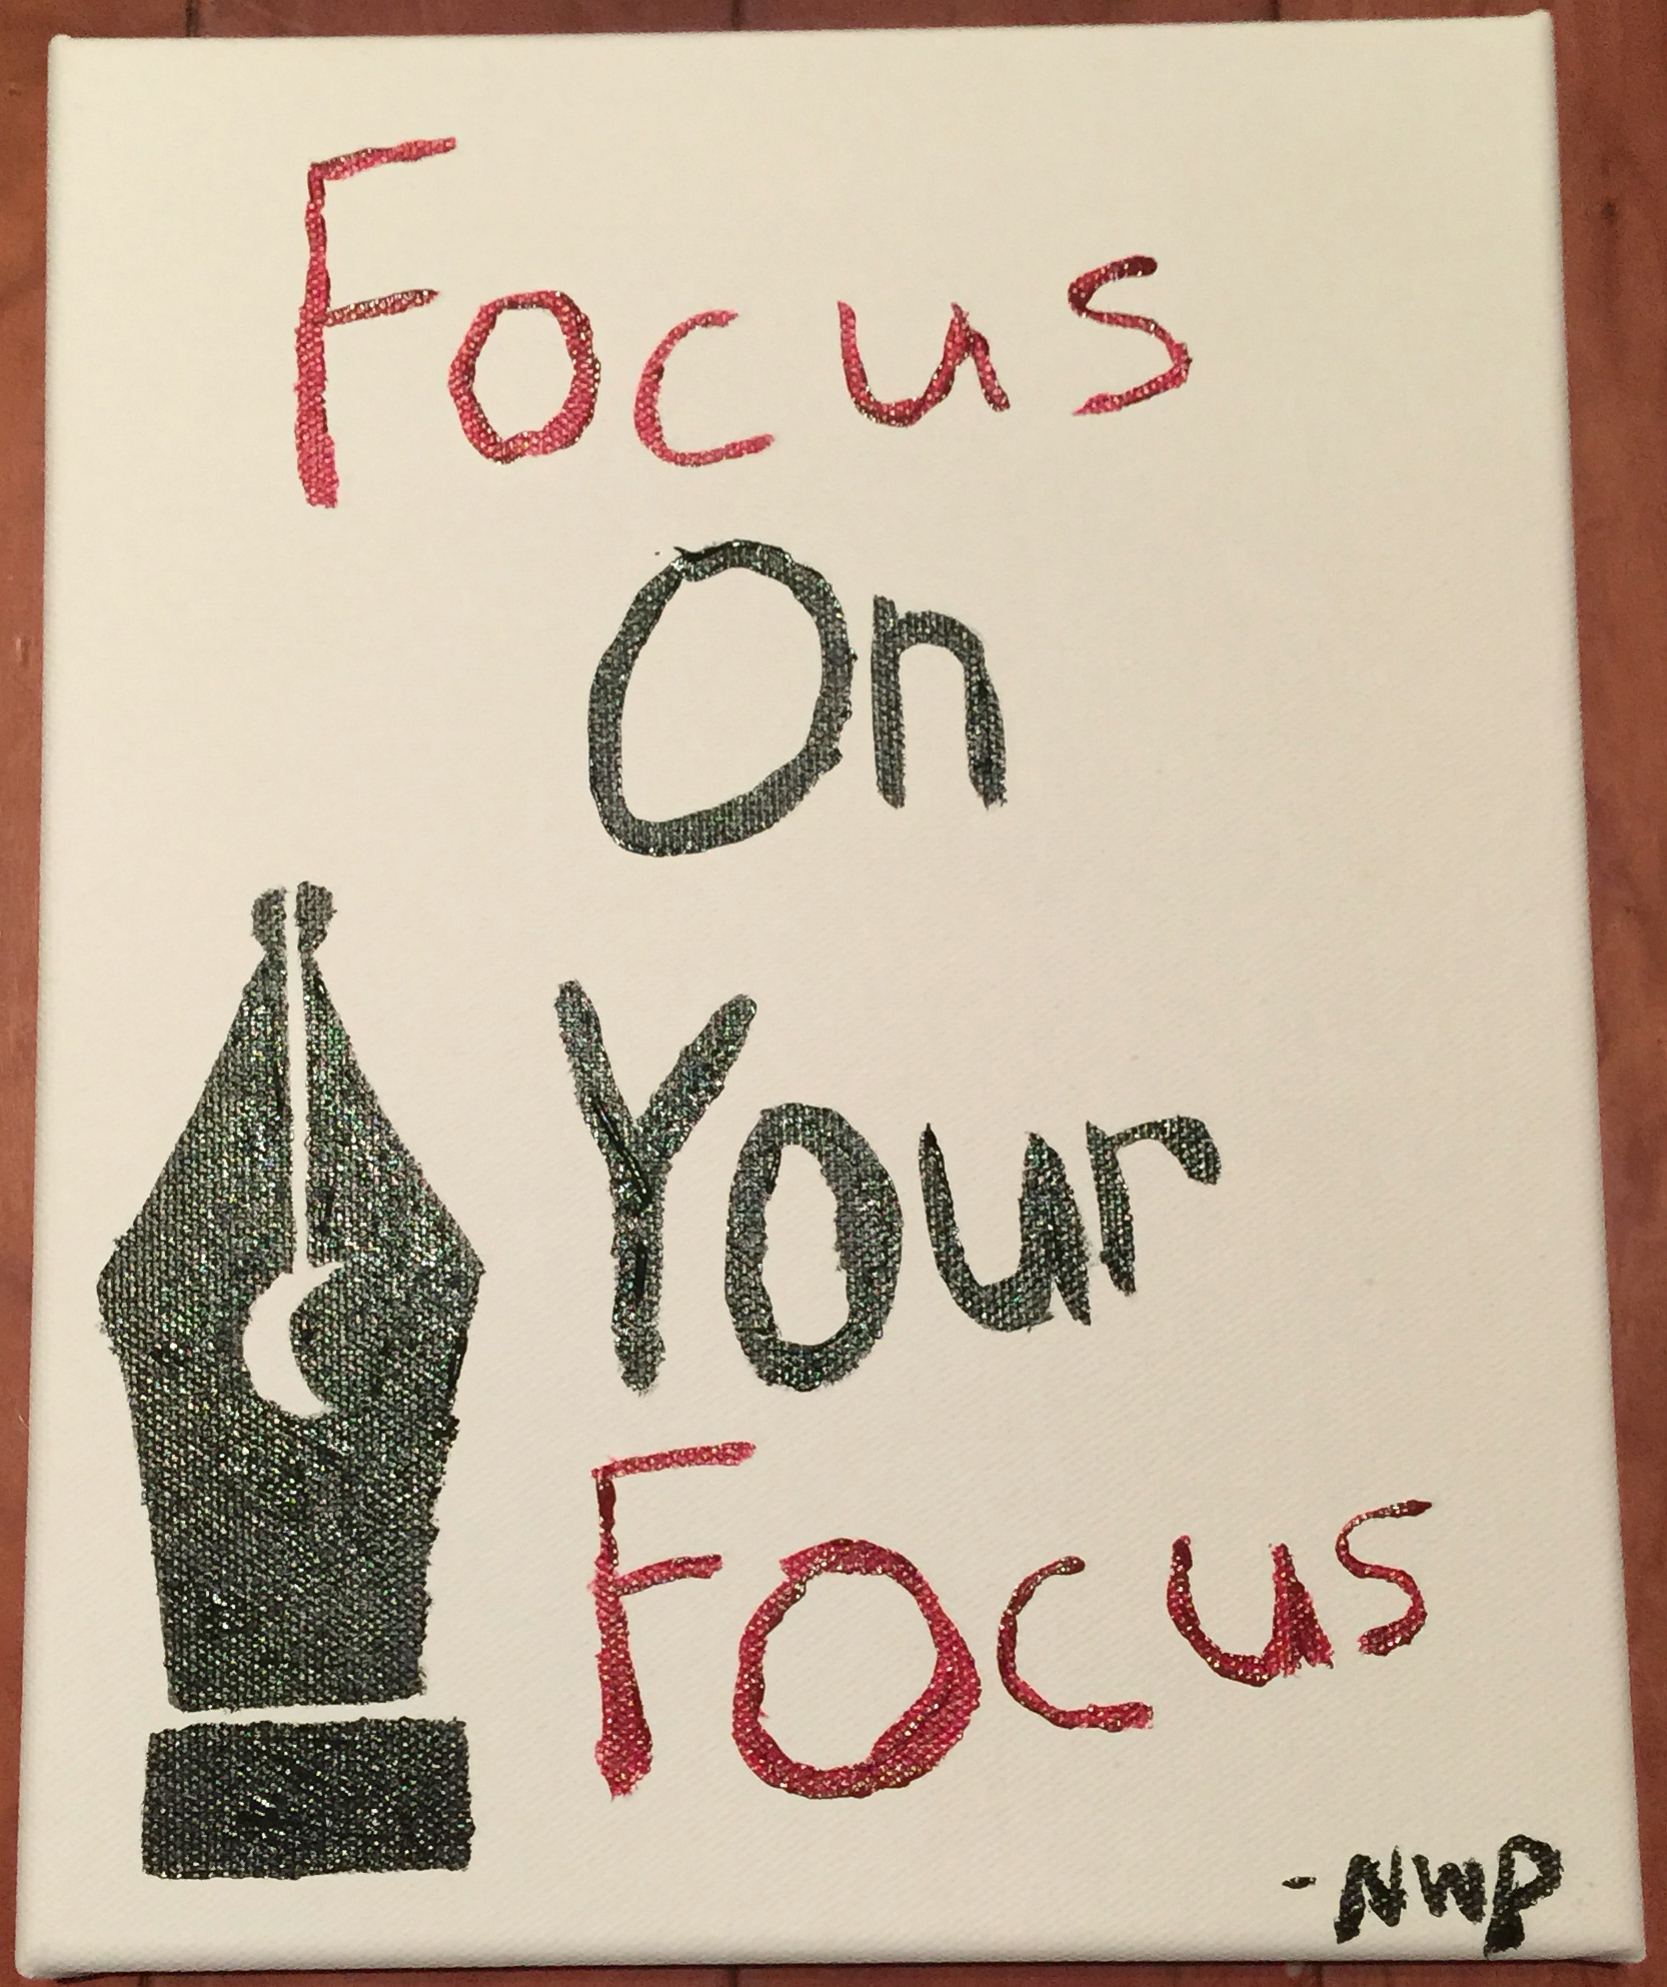 Focus On Your Focus